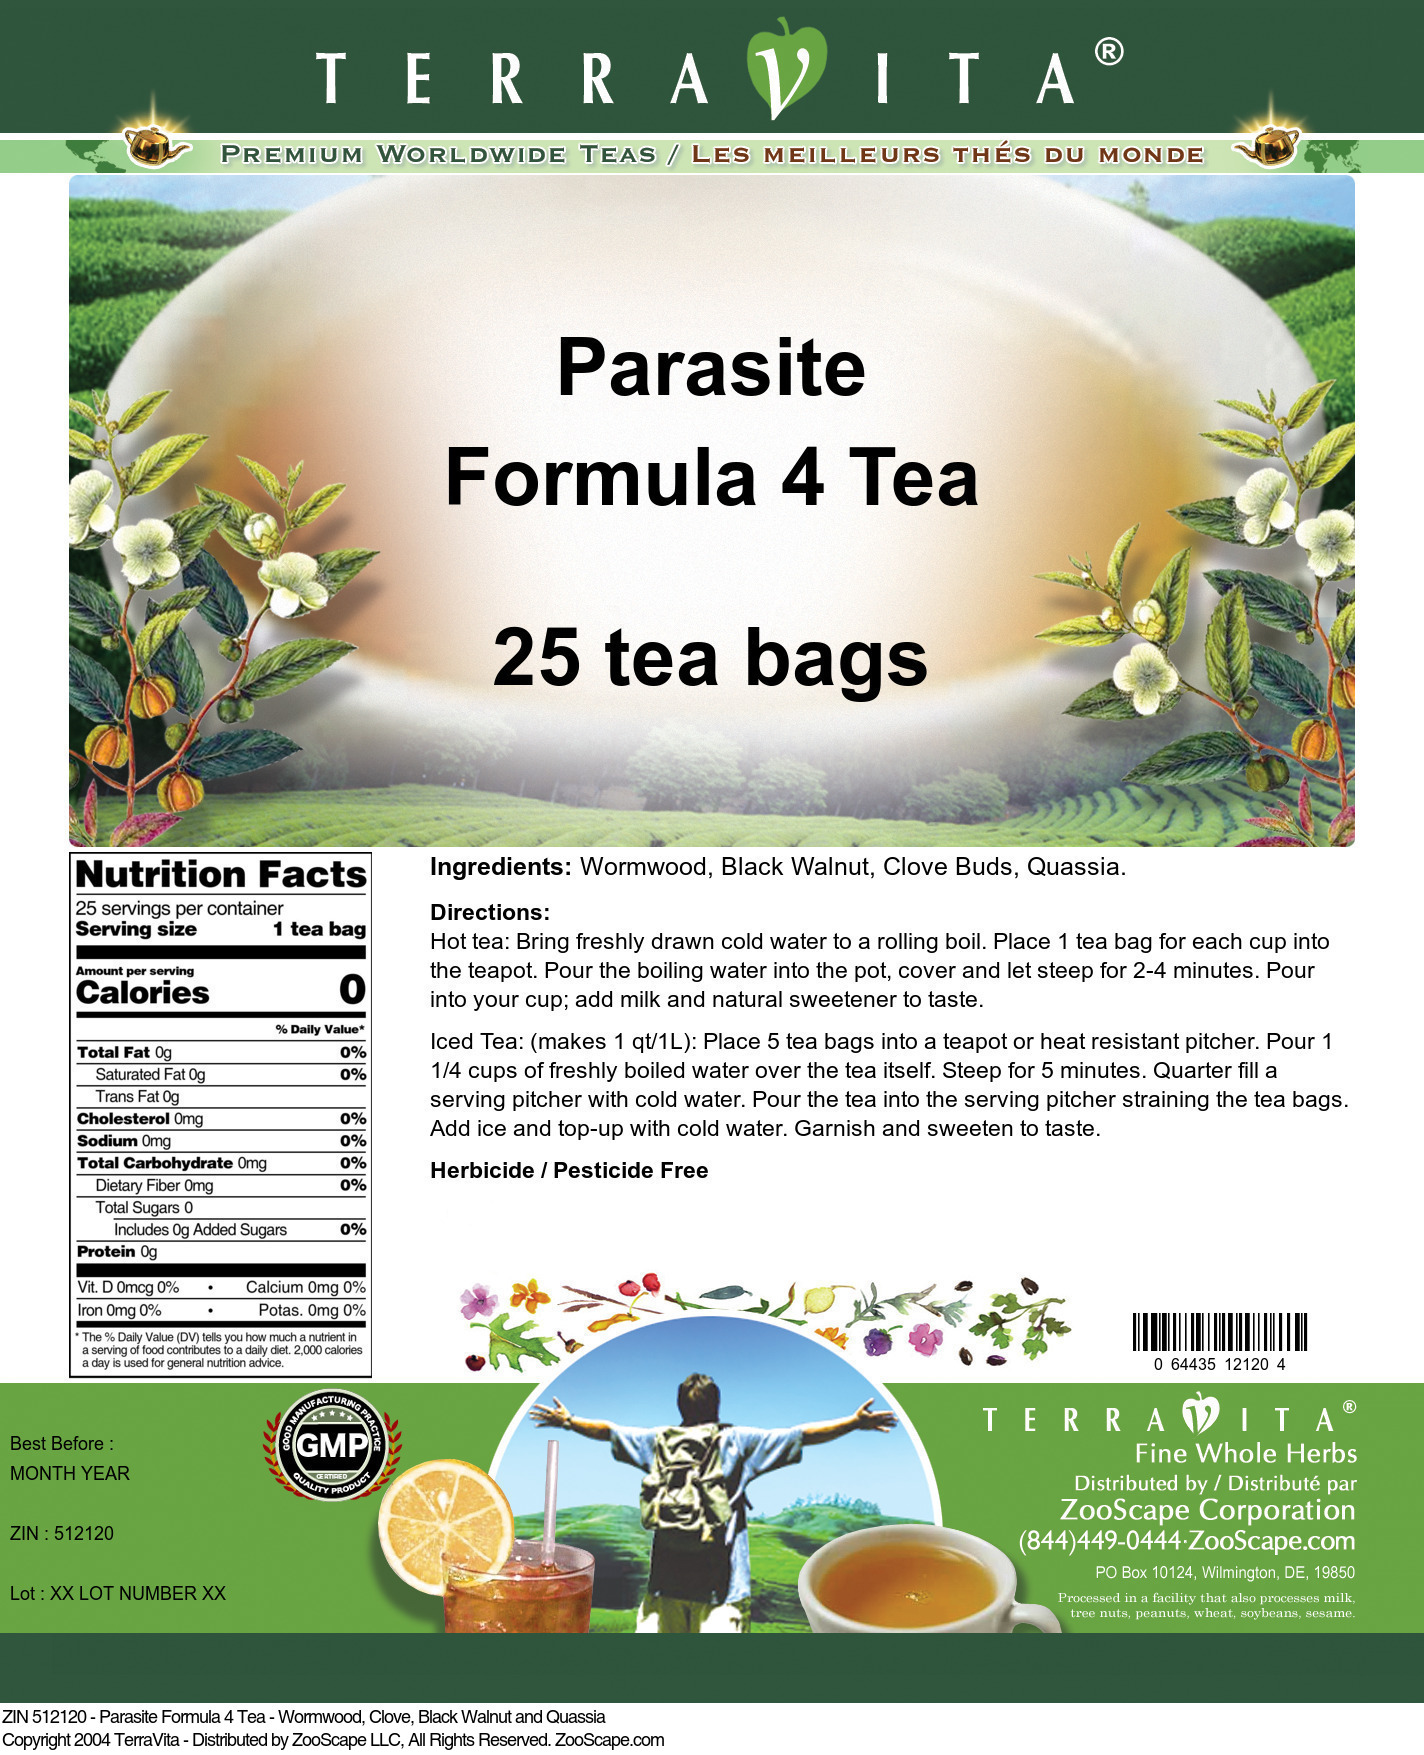 Parasite Formula 4 Tea - Wormwood, Clove, Black Walnut and Quassia - Label